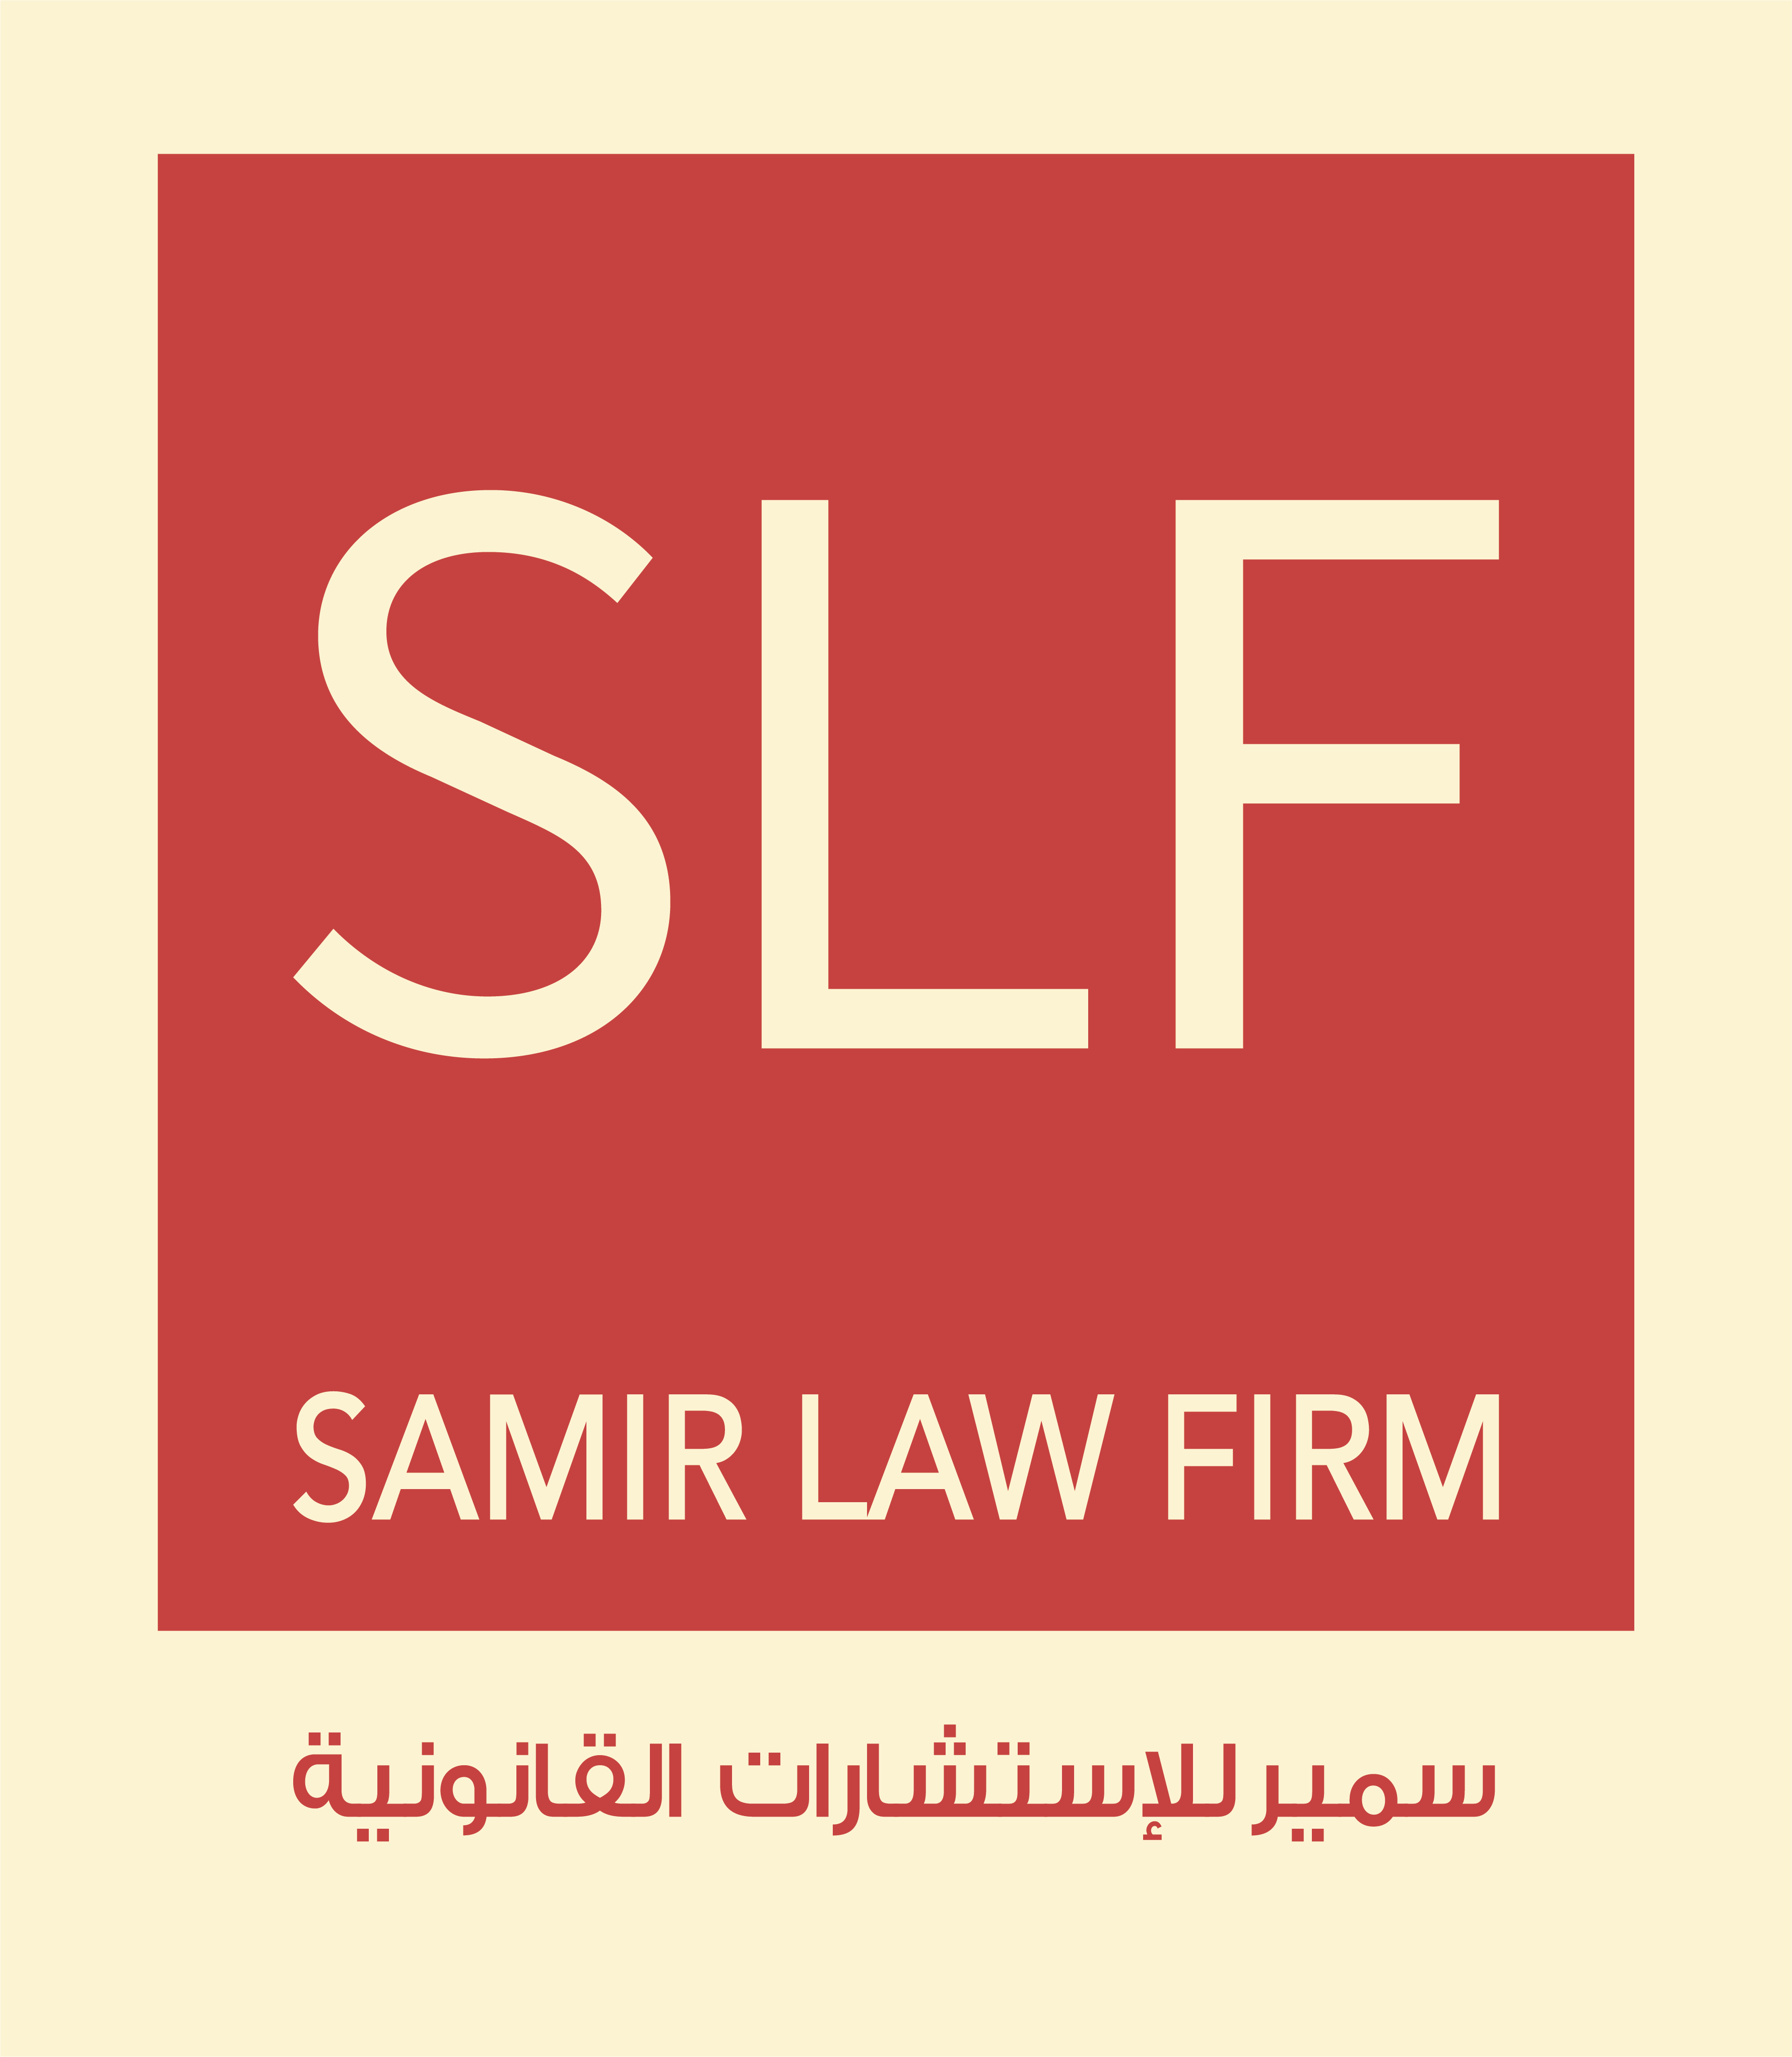 Samir Law firm